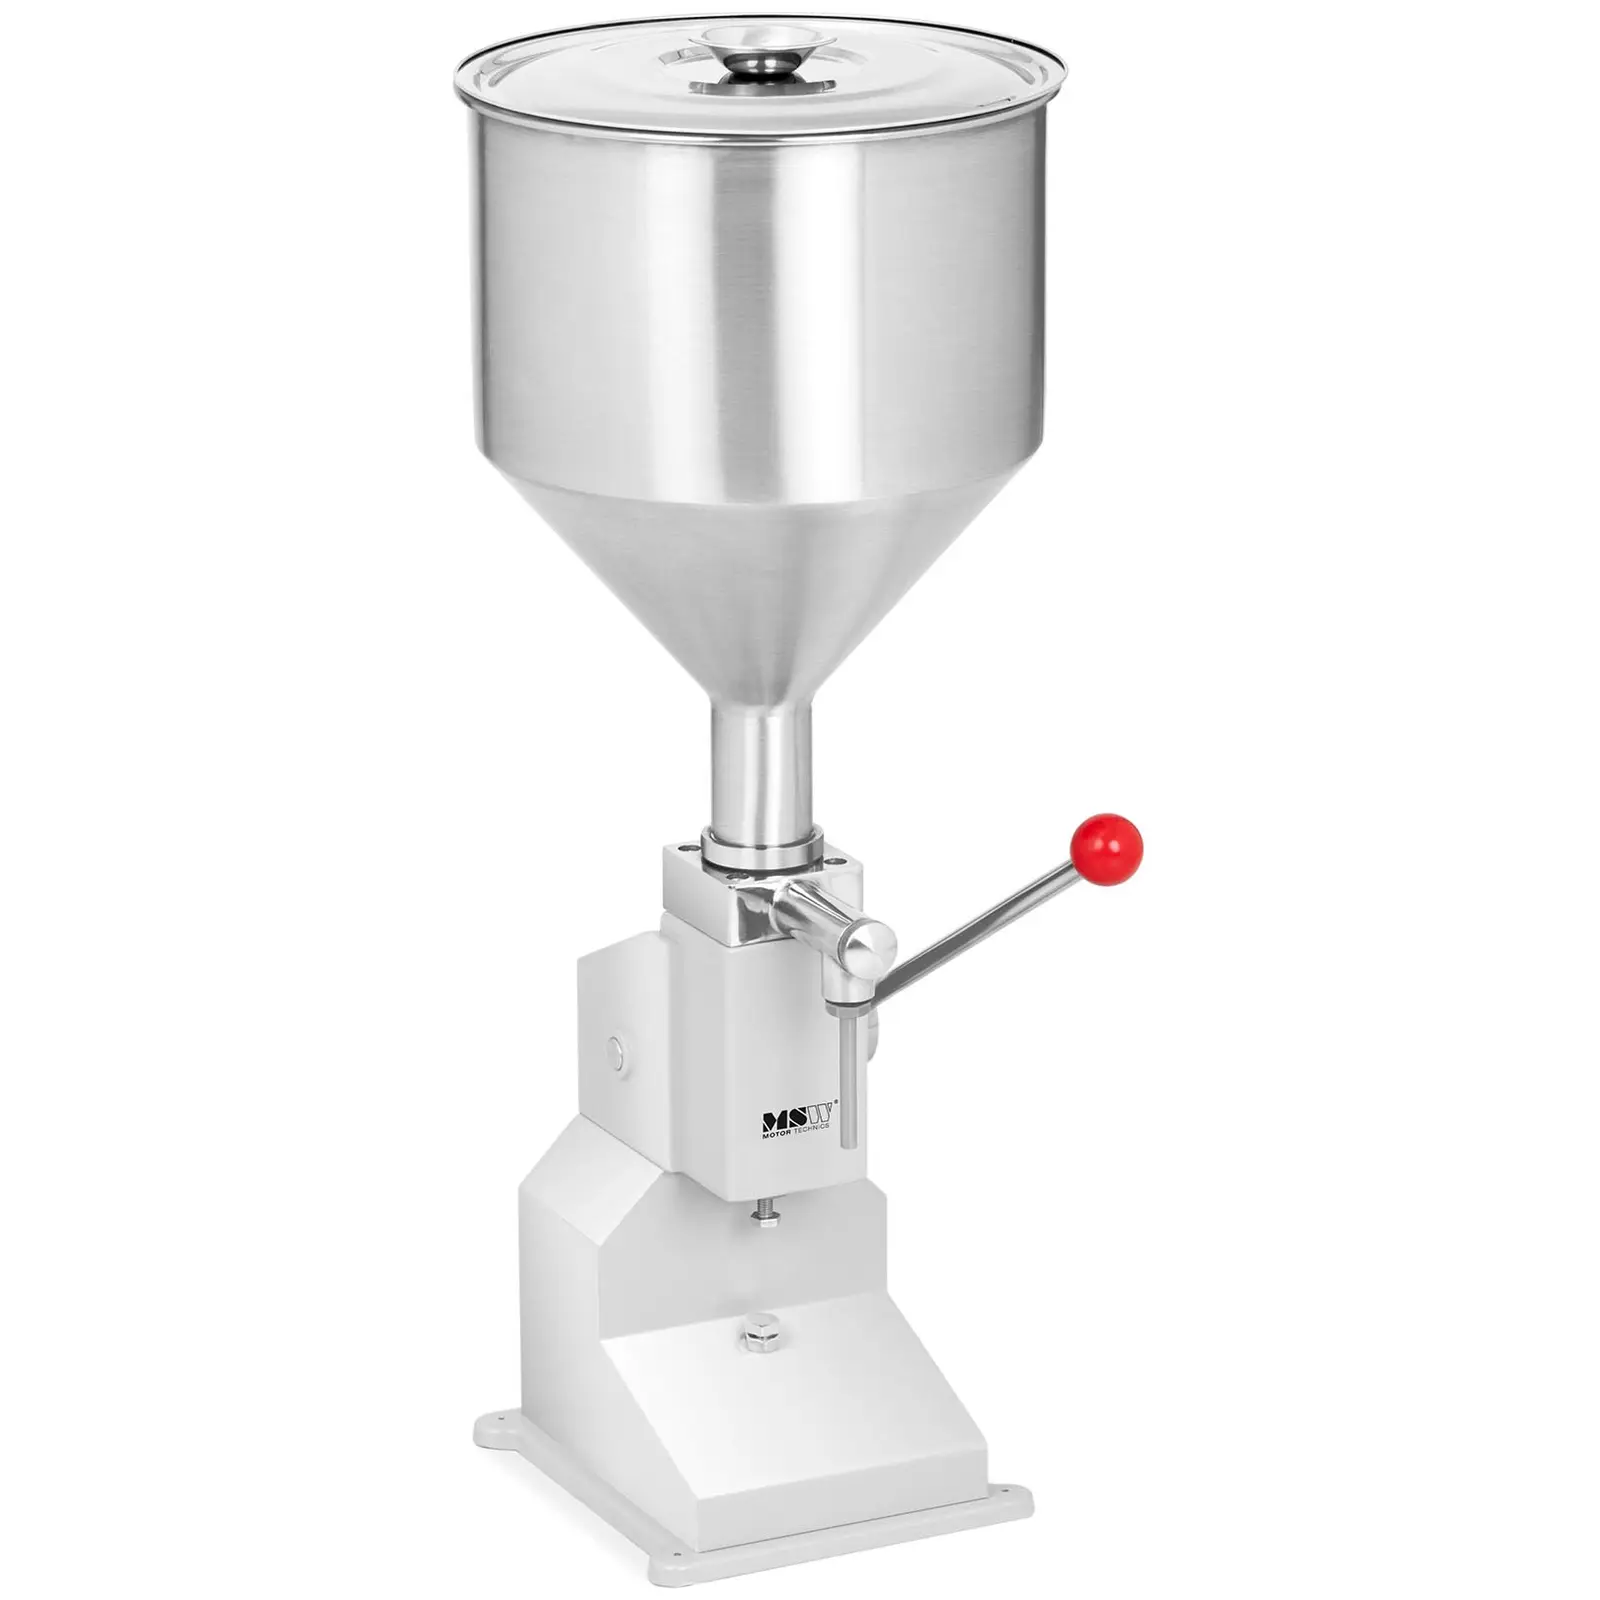 Manual Liquid Filling Machine - 50 ml